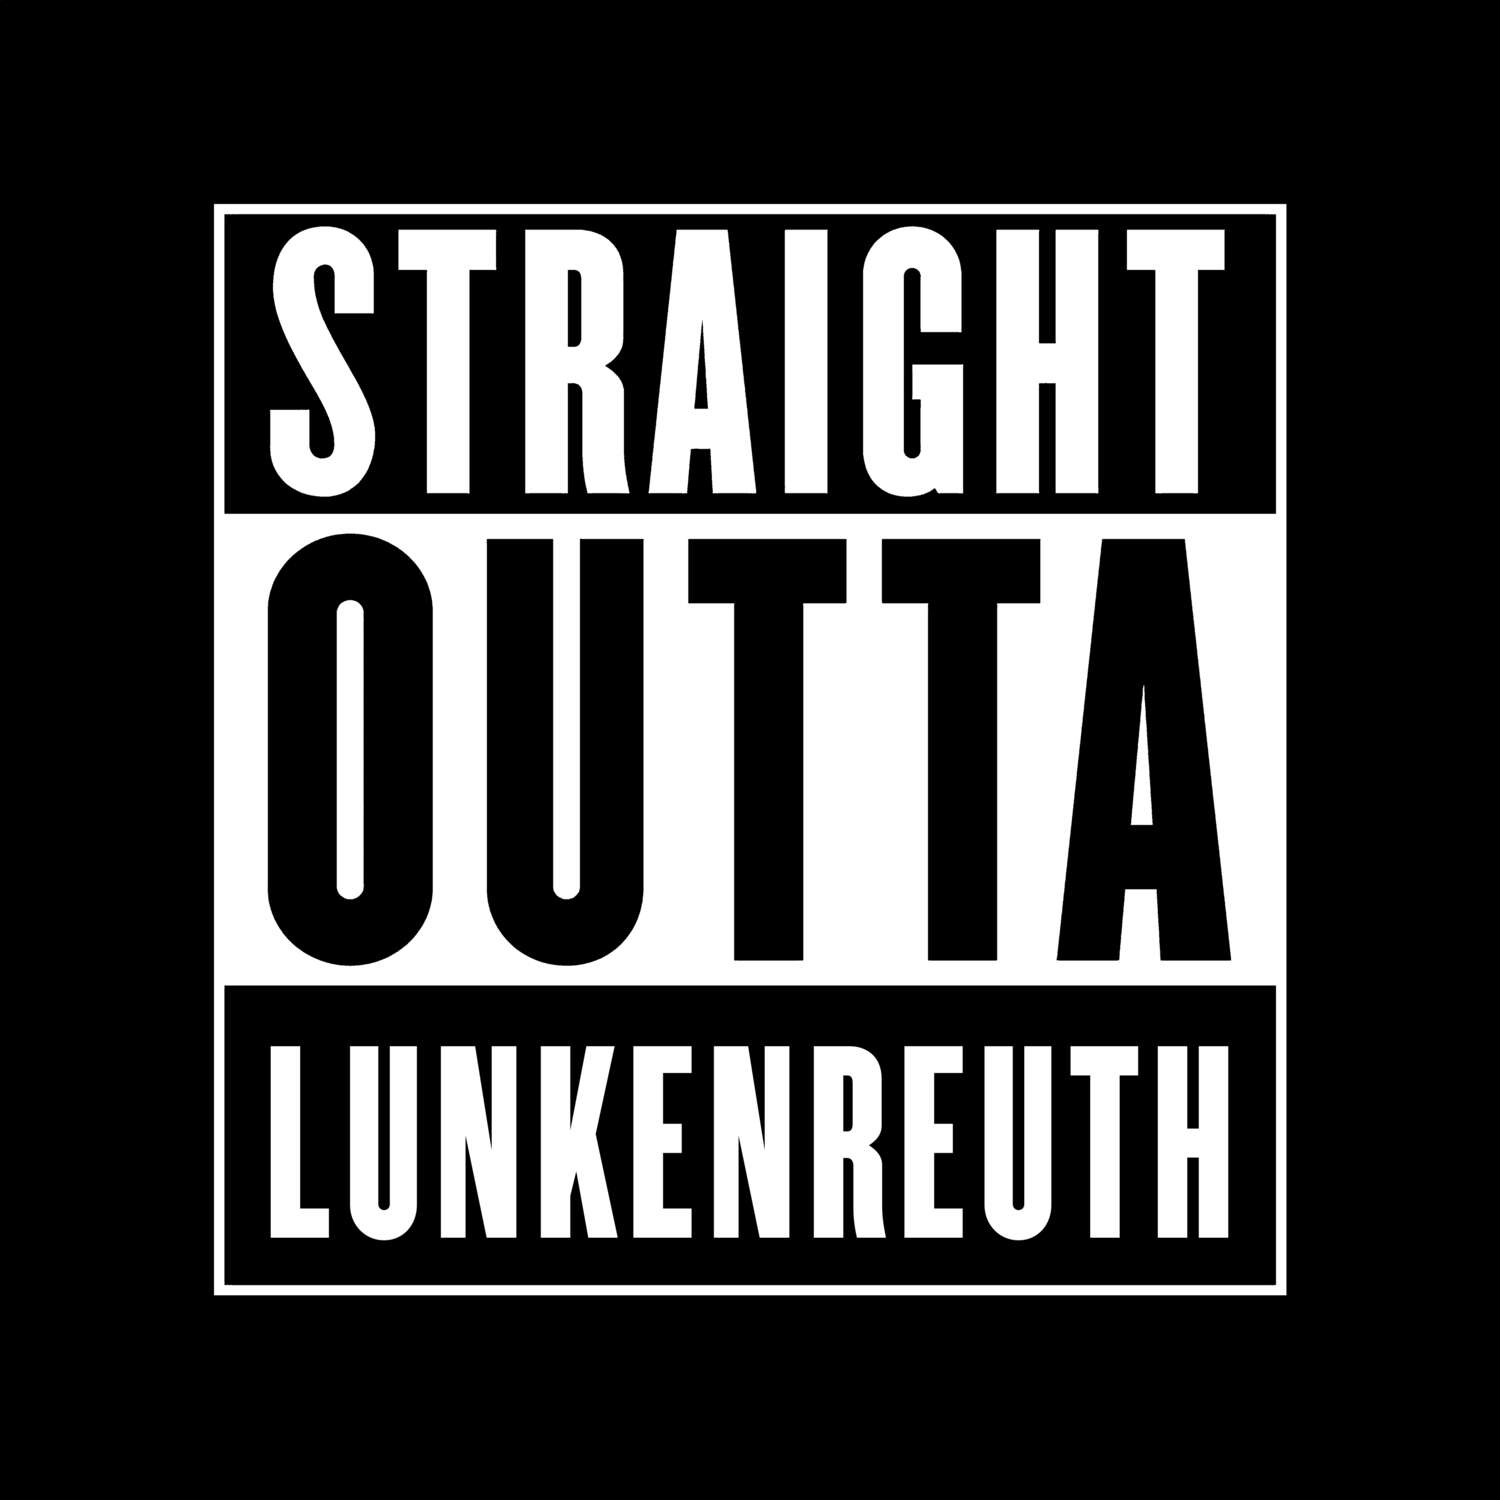 Lunkenreuth T-Shirt »Straight Outta«